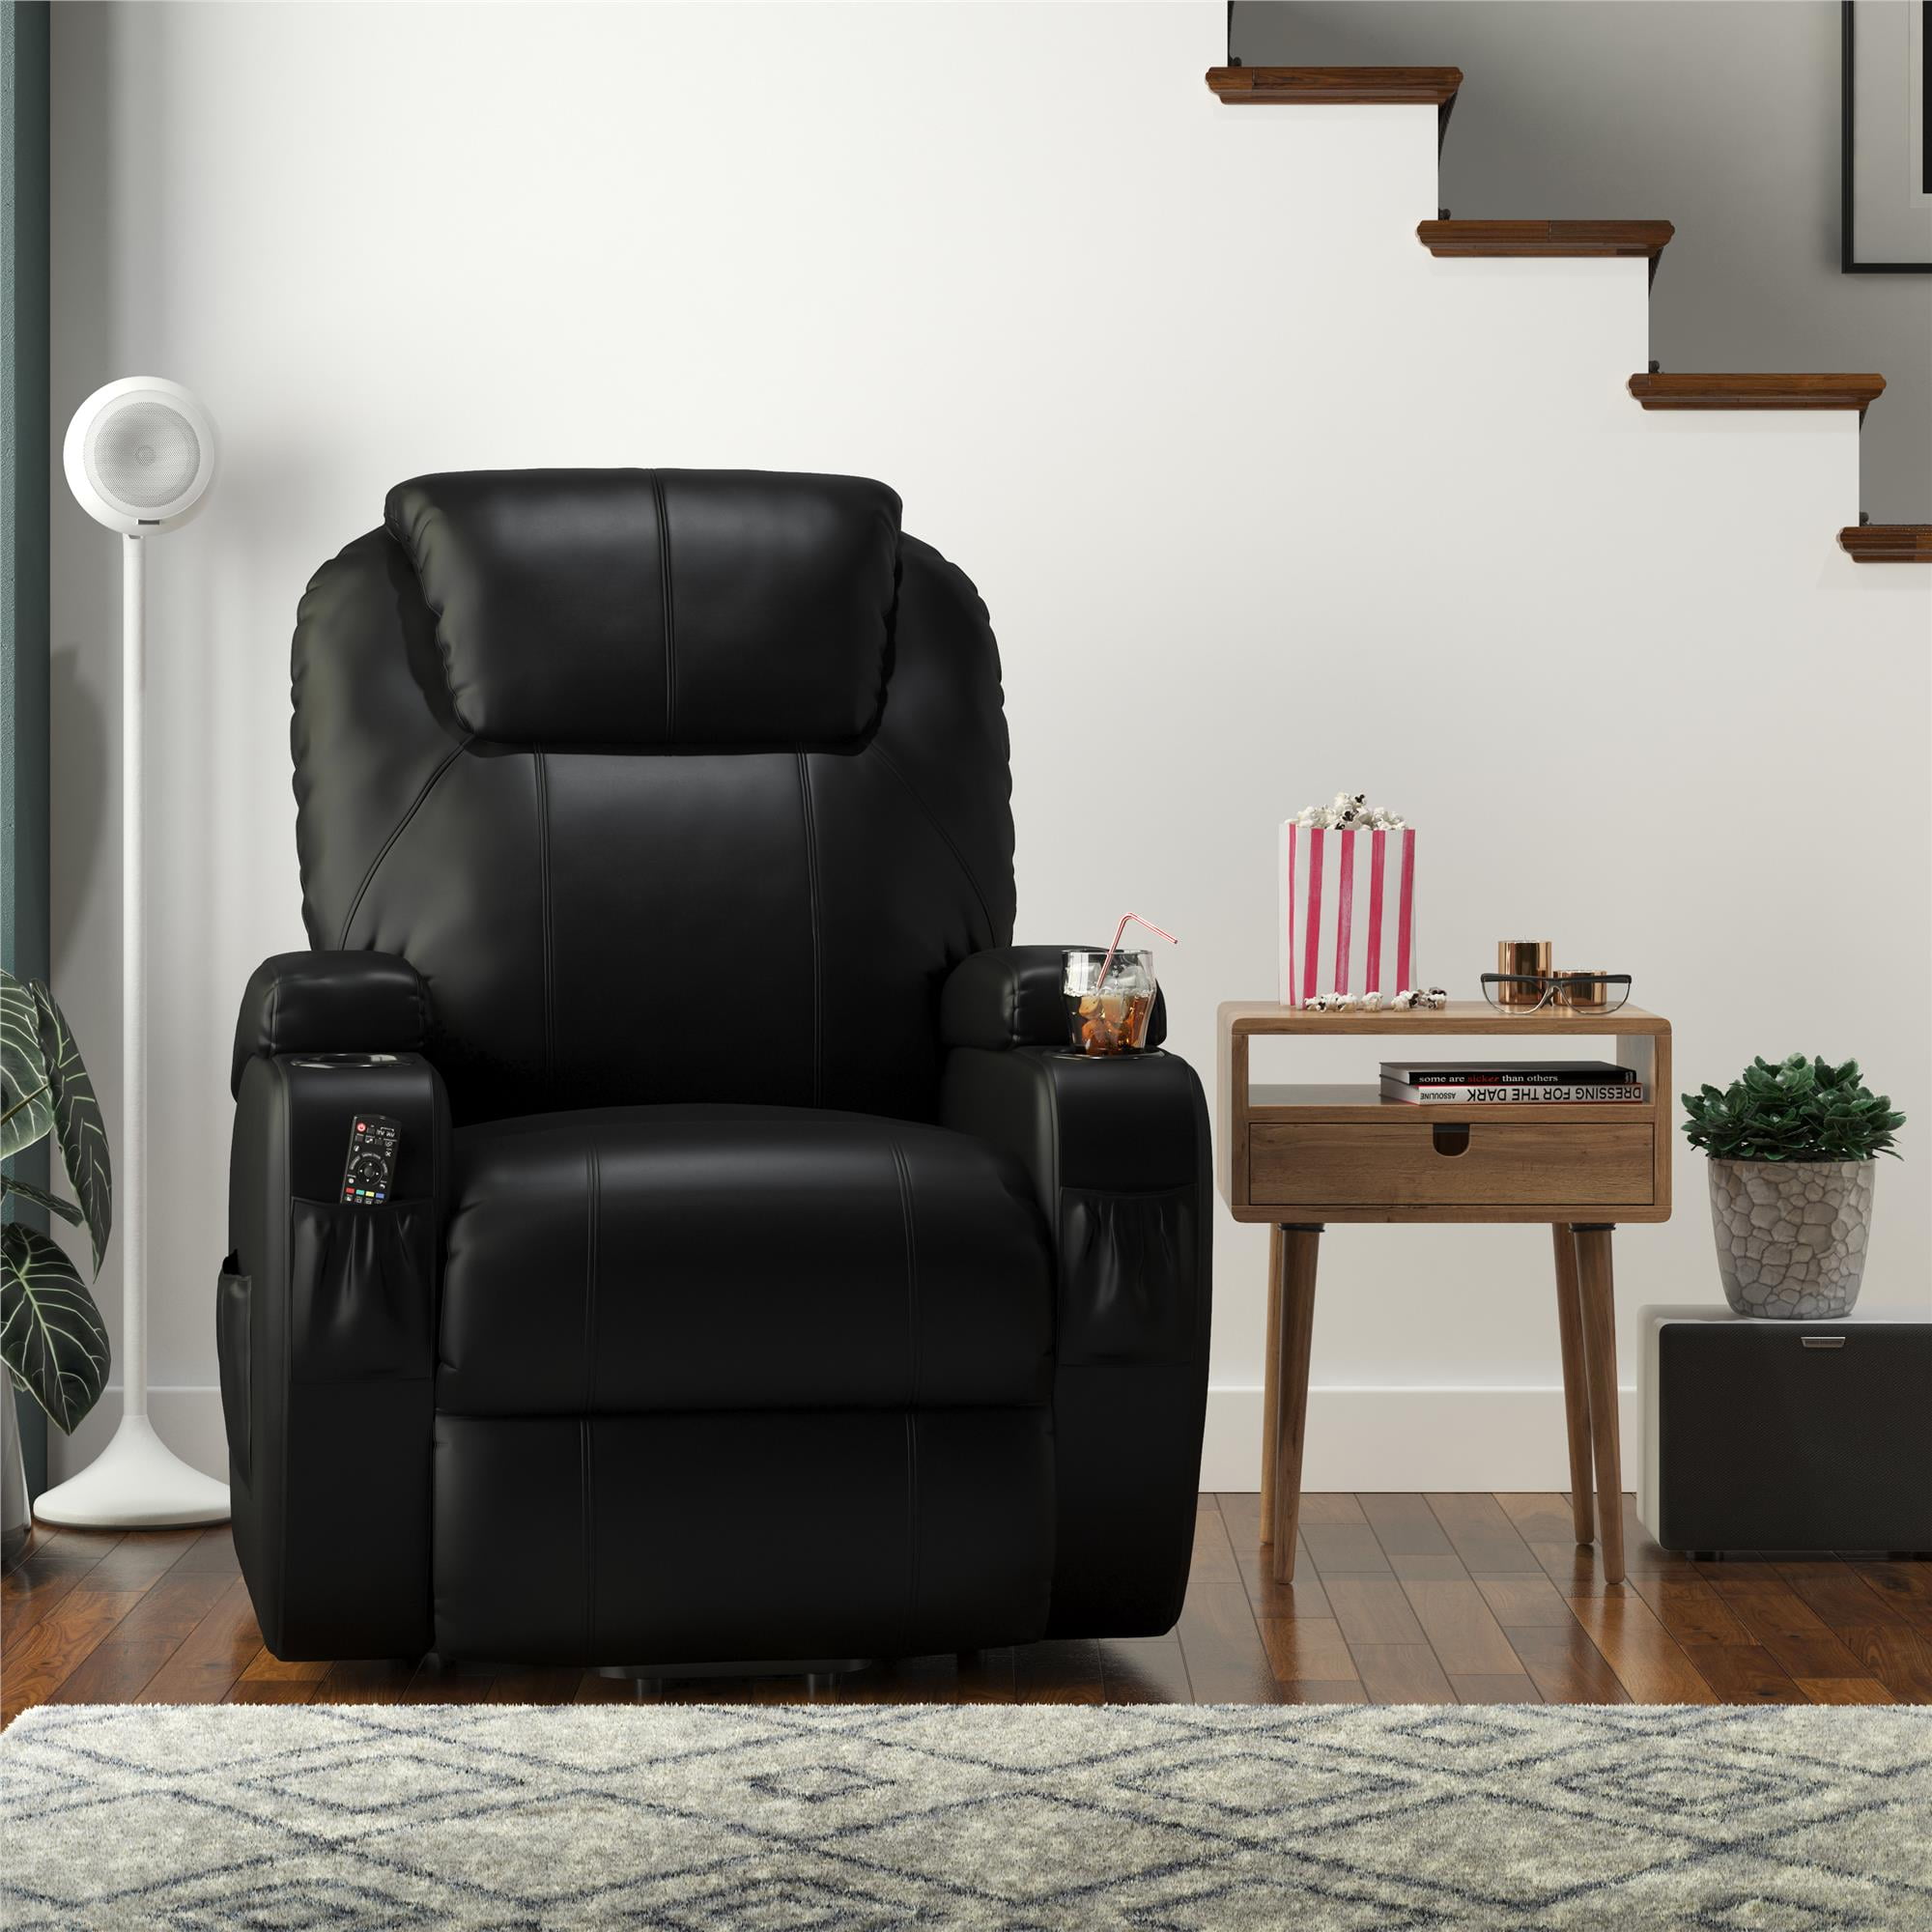 Large Divano Roma Furniture Classic Plush Power Lift Recliner Living Room Chair Grey